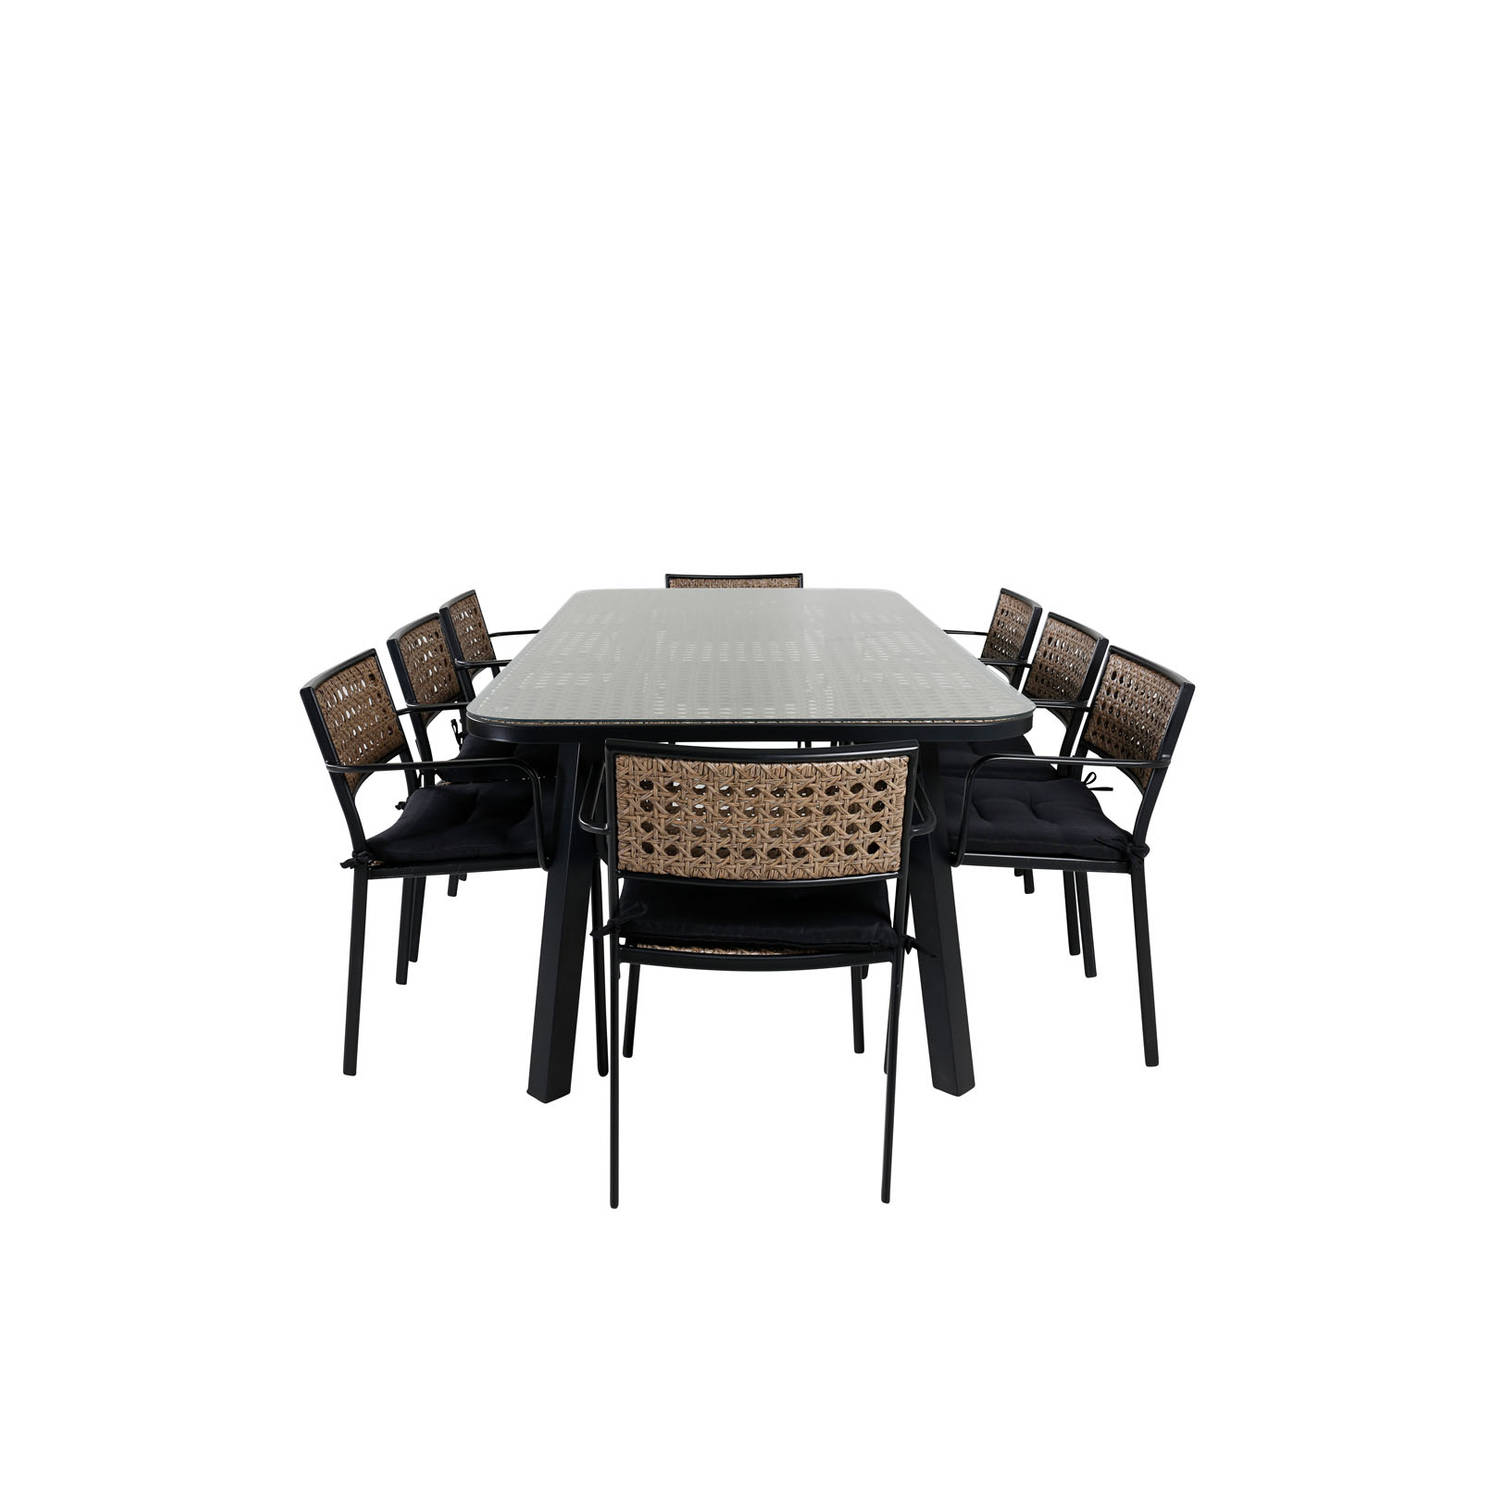 Paola tuinmeubelset tafel 100x200cm en 8 stoel Paola zwart, naturel.